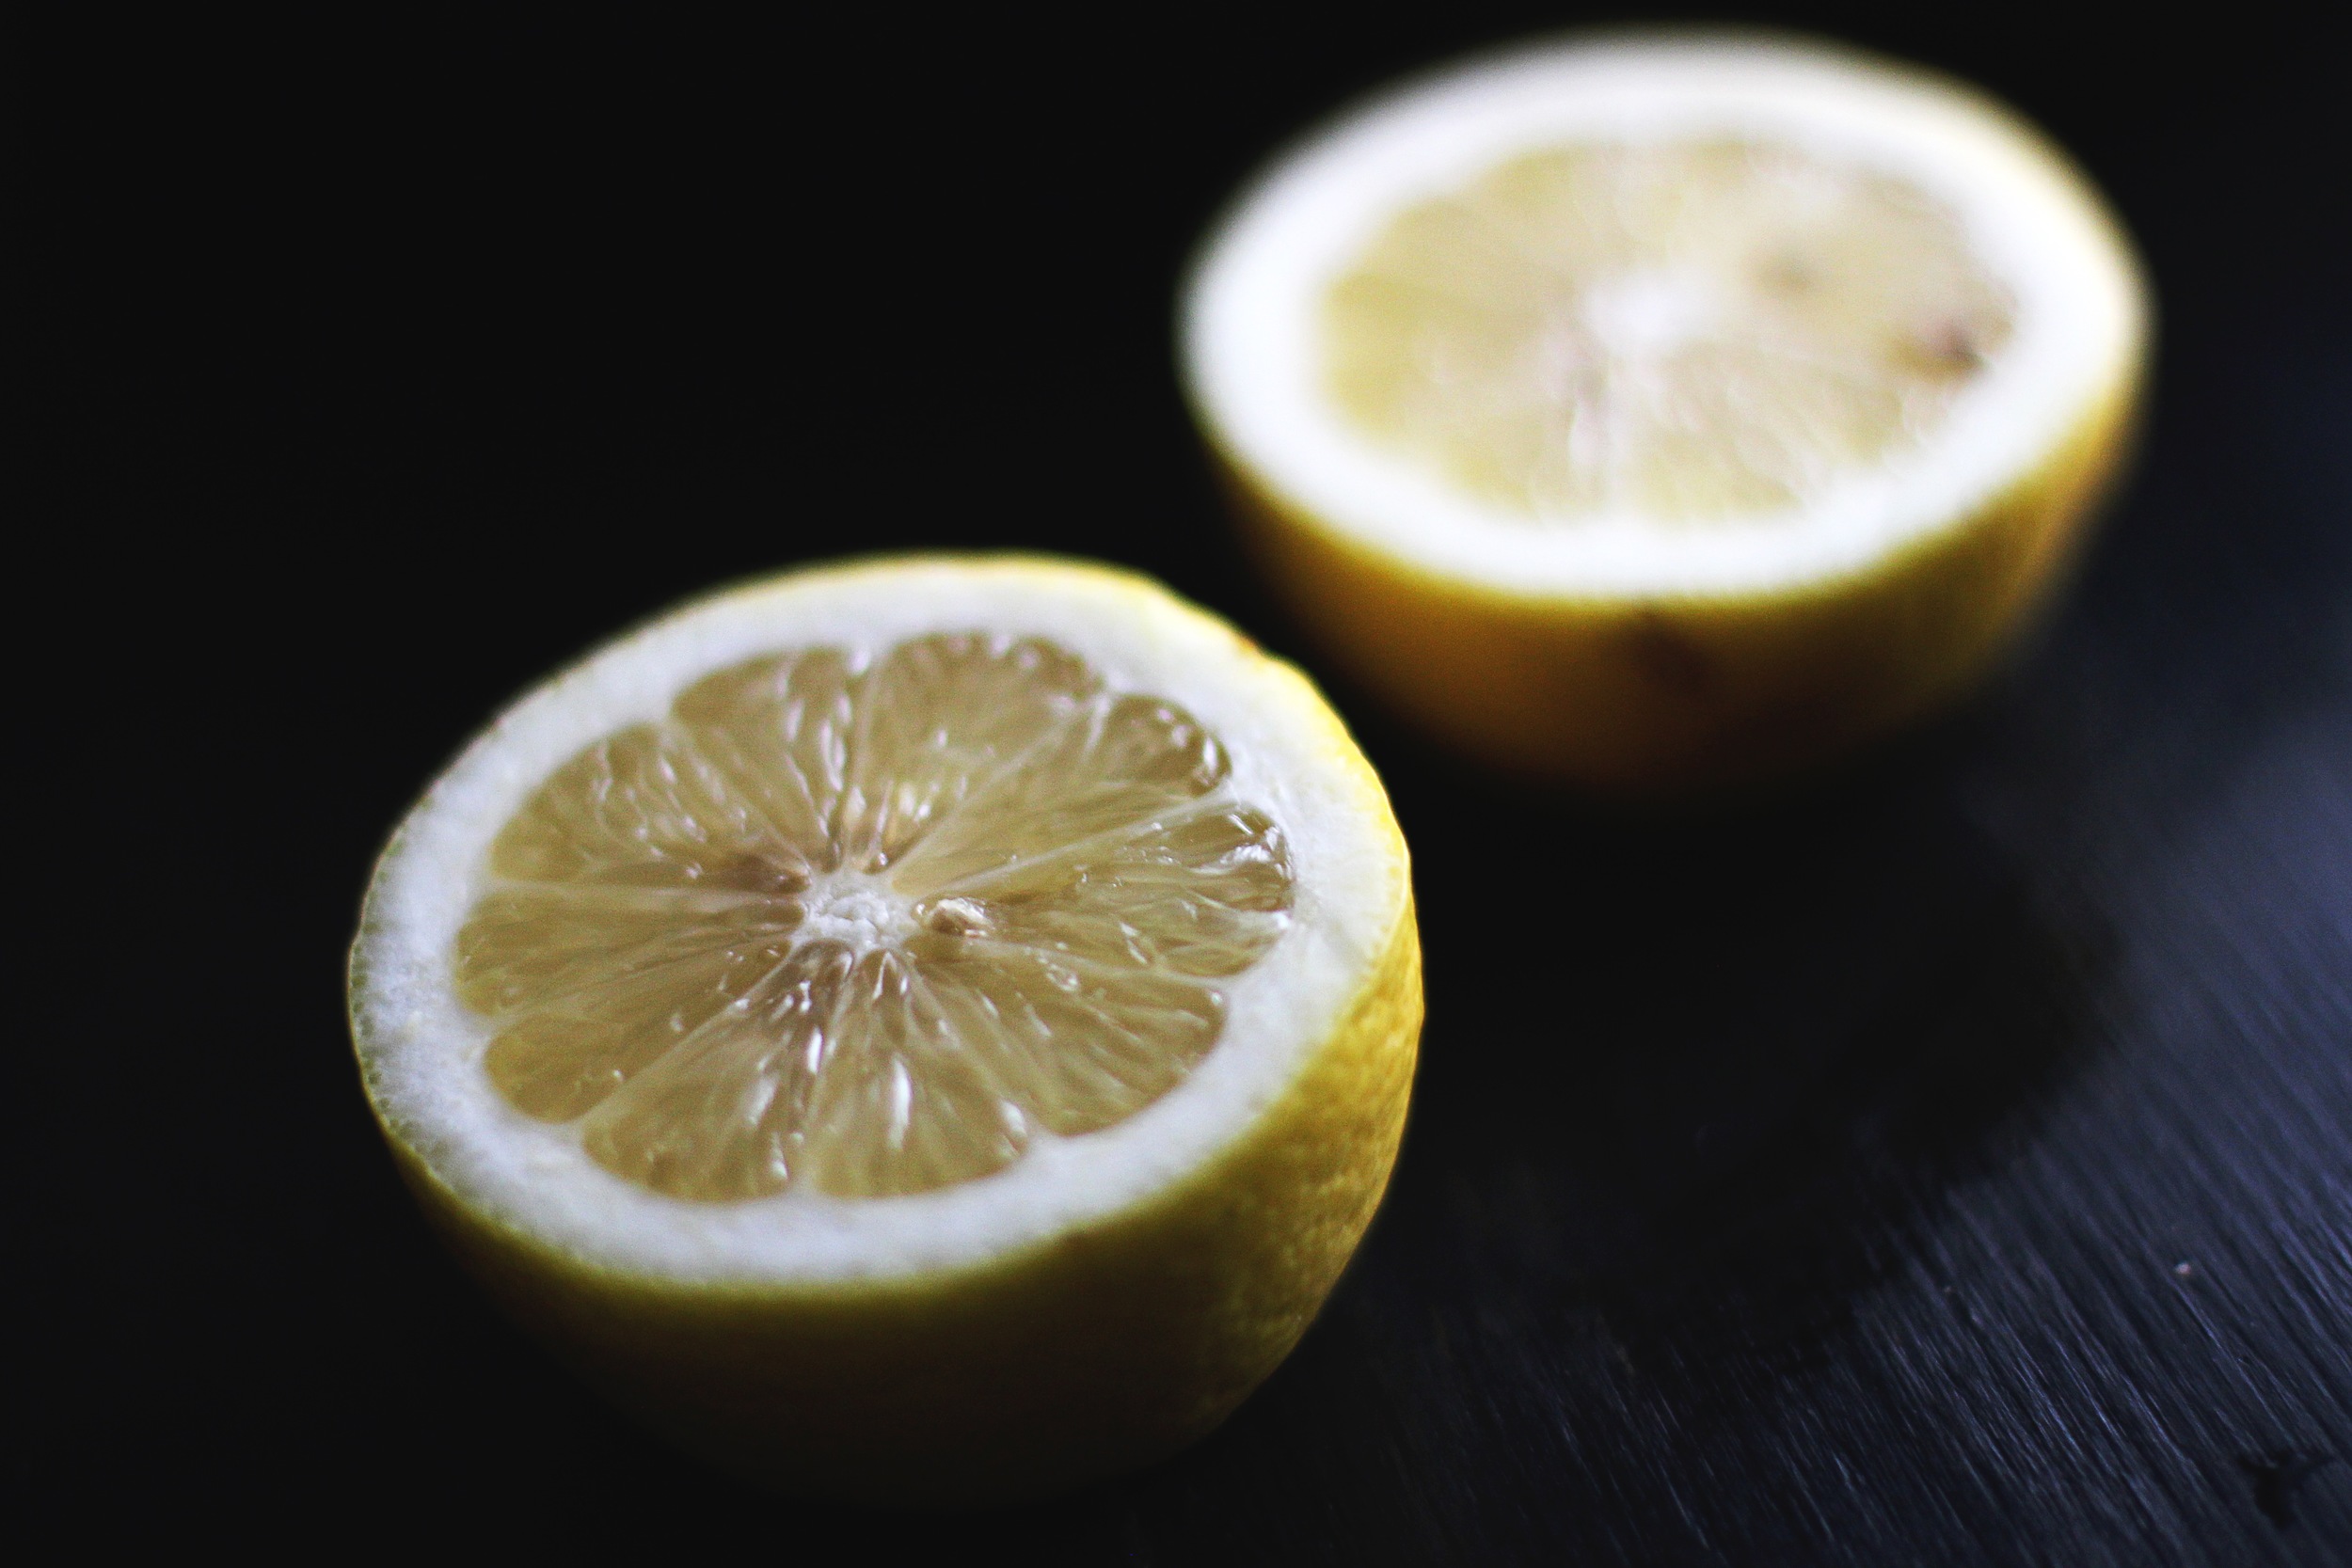 Lemon. Credit - shutterstock.com